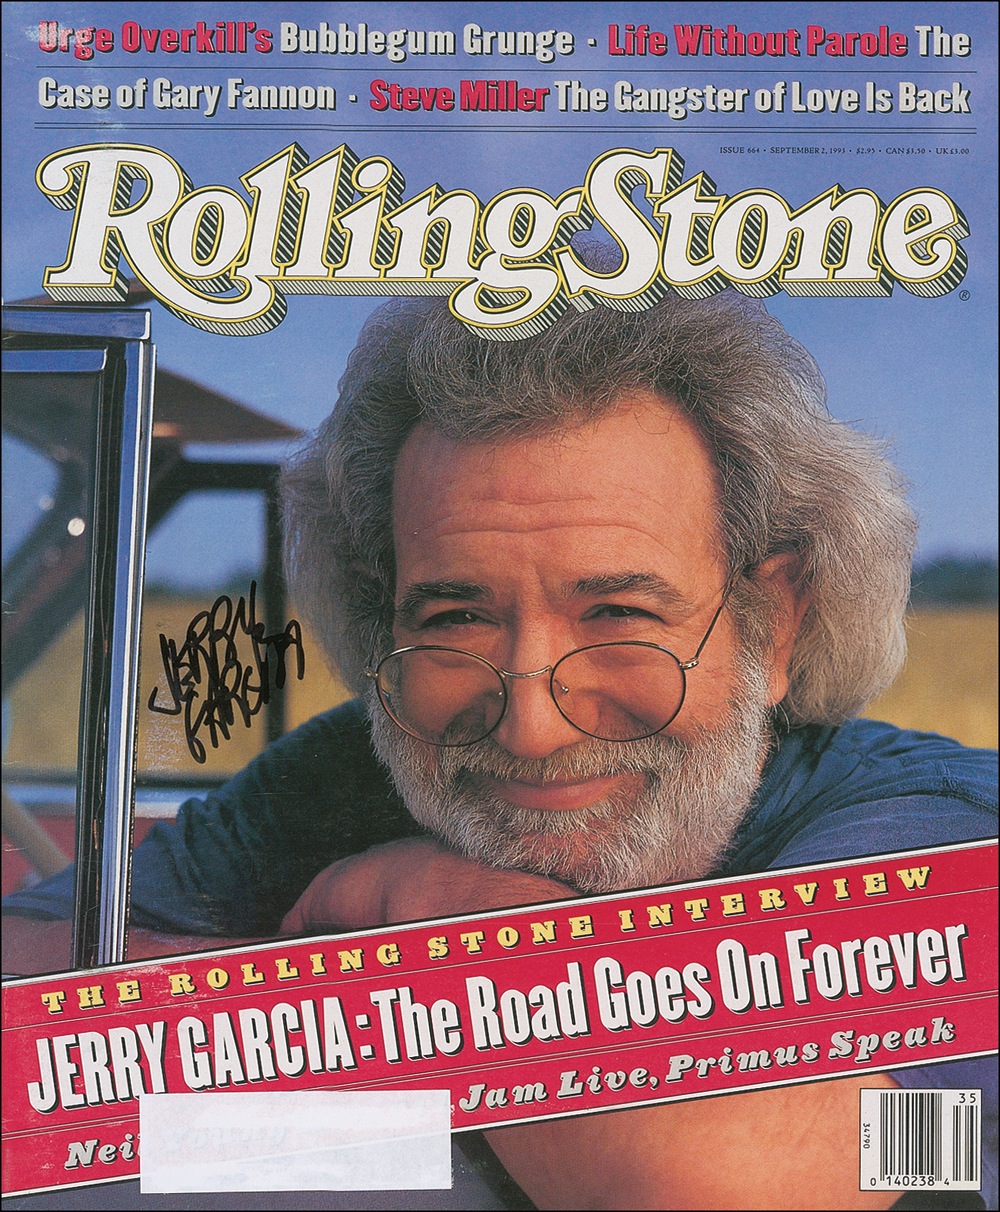 Lot #715 Grateful Dead: Jerry Garcia